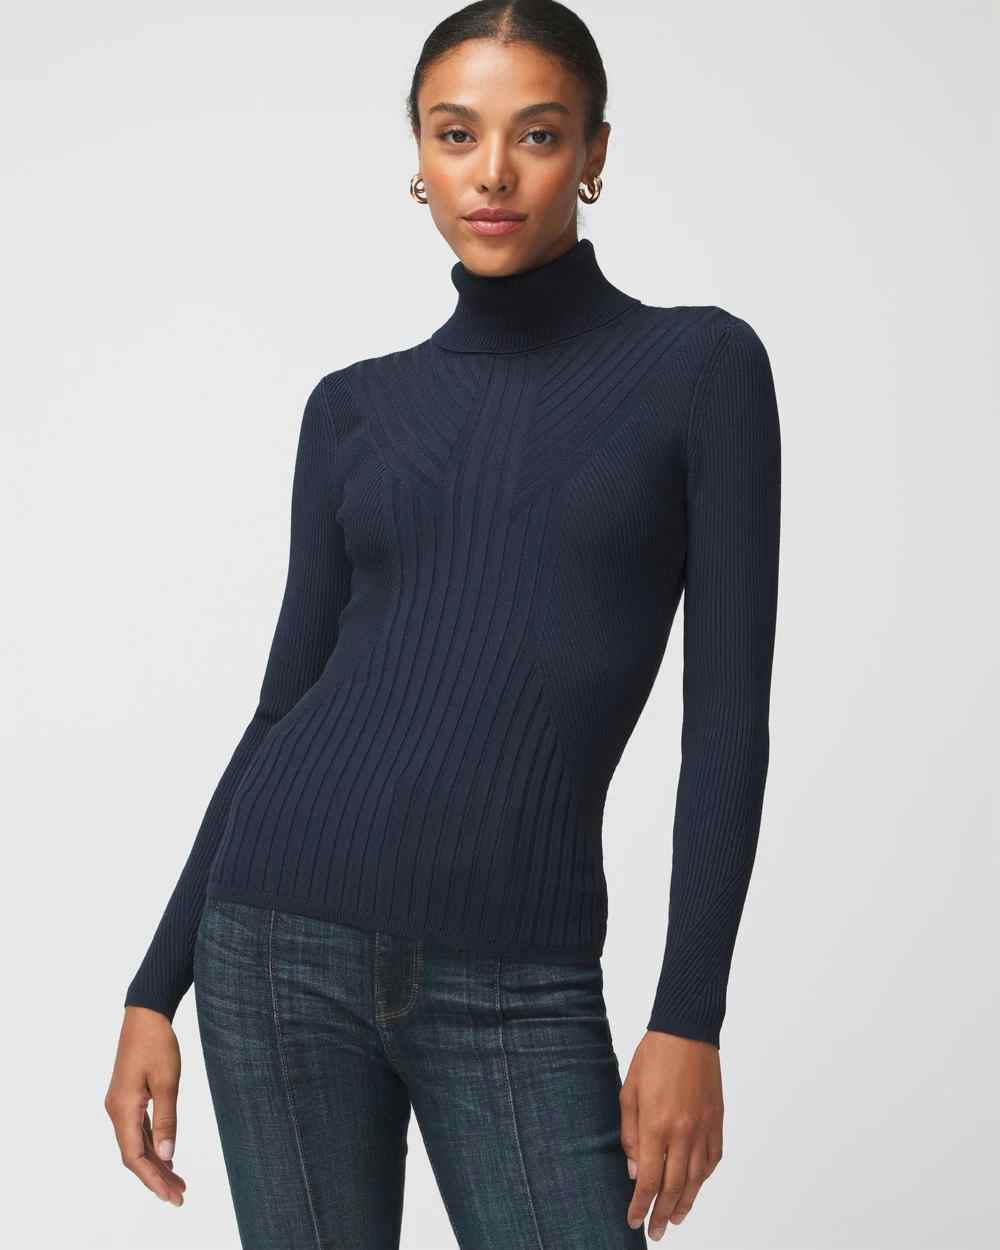 Shop Women's Sweaters | White House Black Market